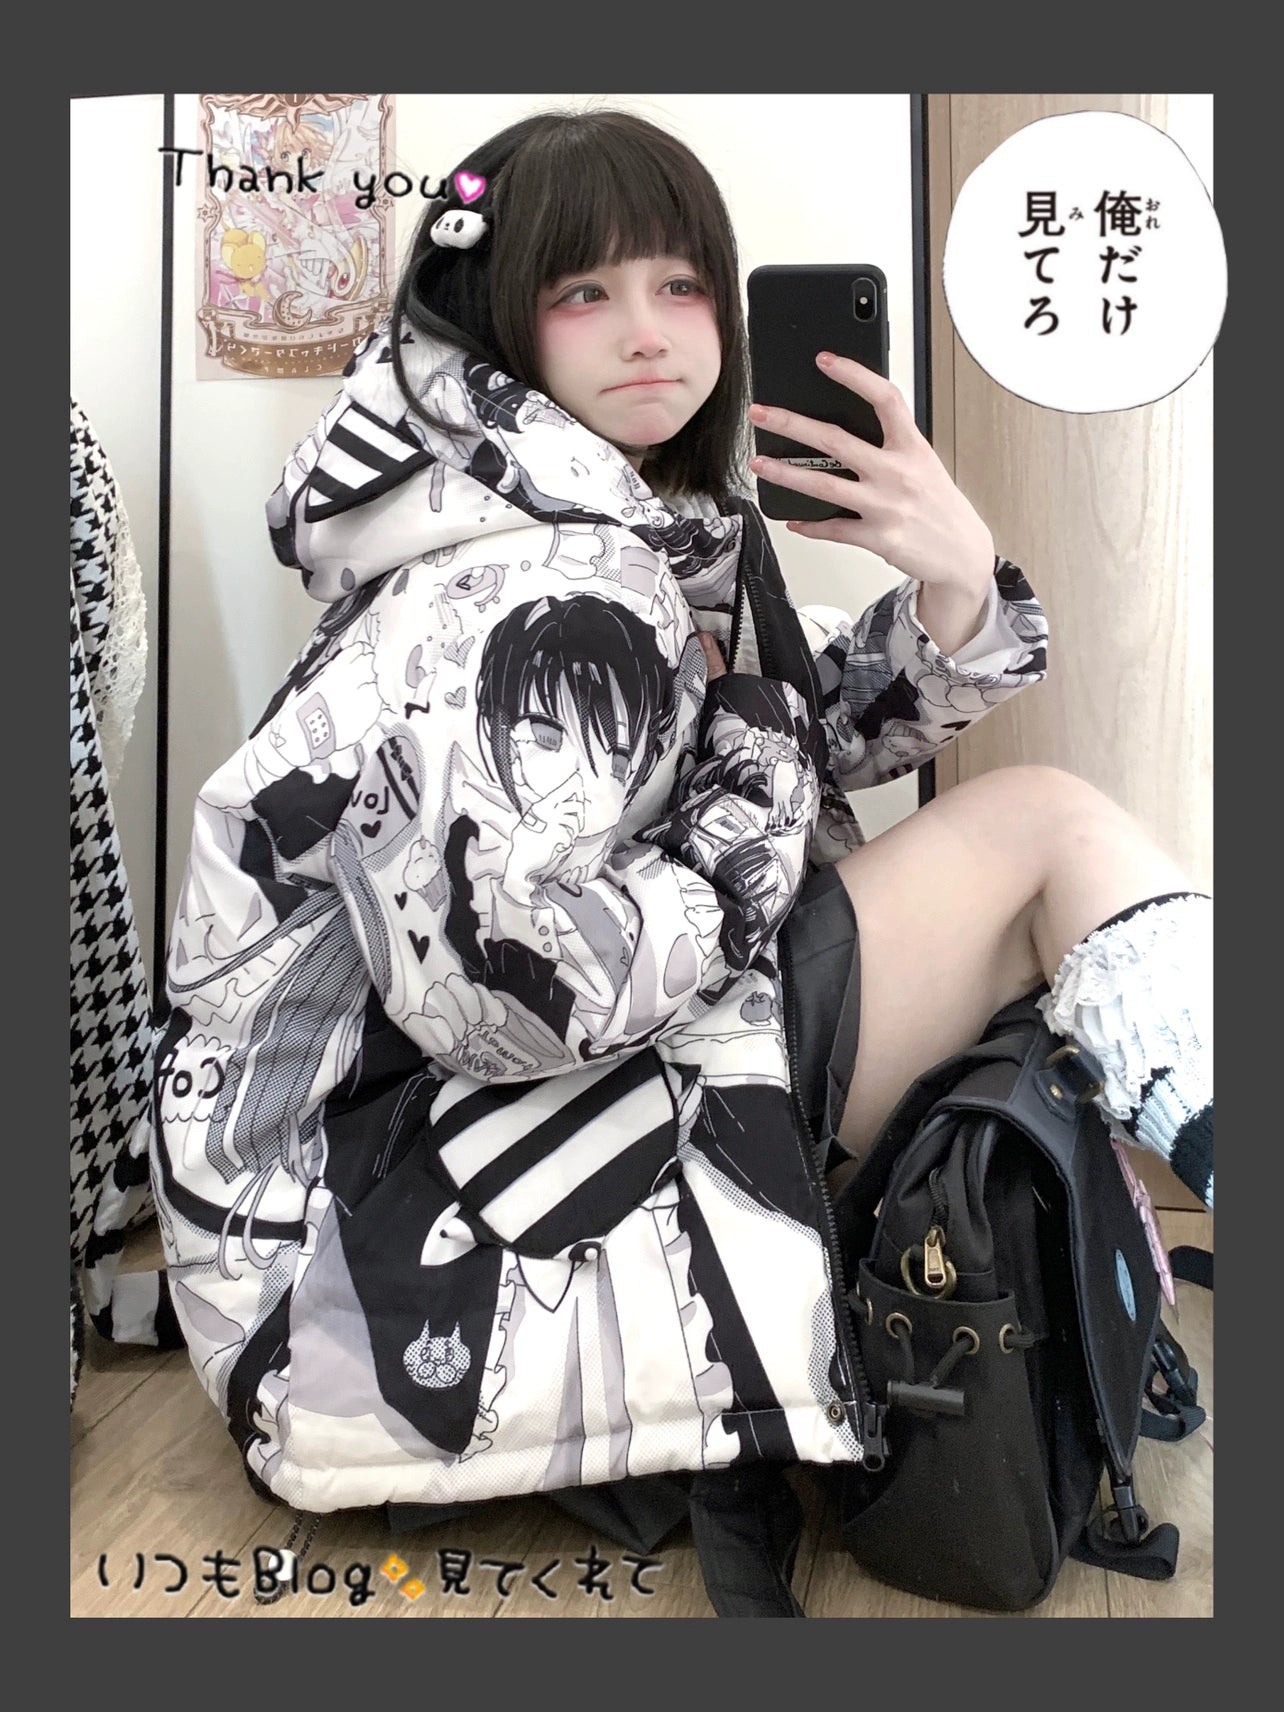 Kawaii Winter Coat Black White Girl Printed Cat Ear Padded Down Jacket 33318:431610